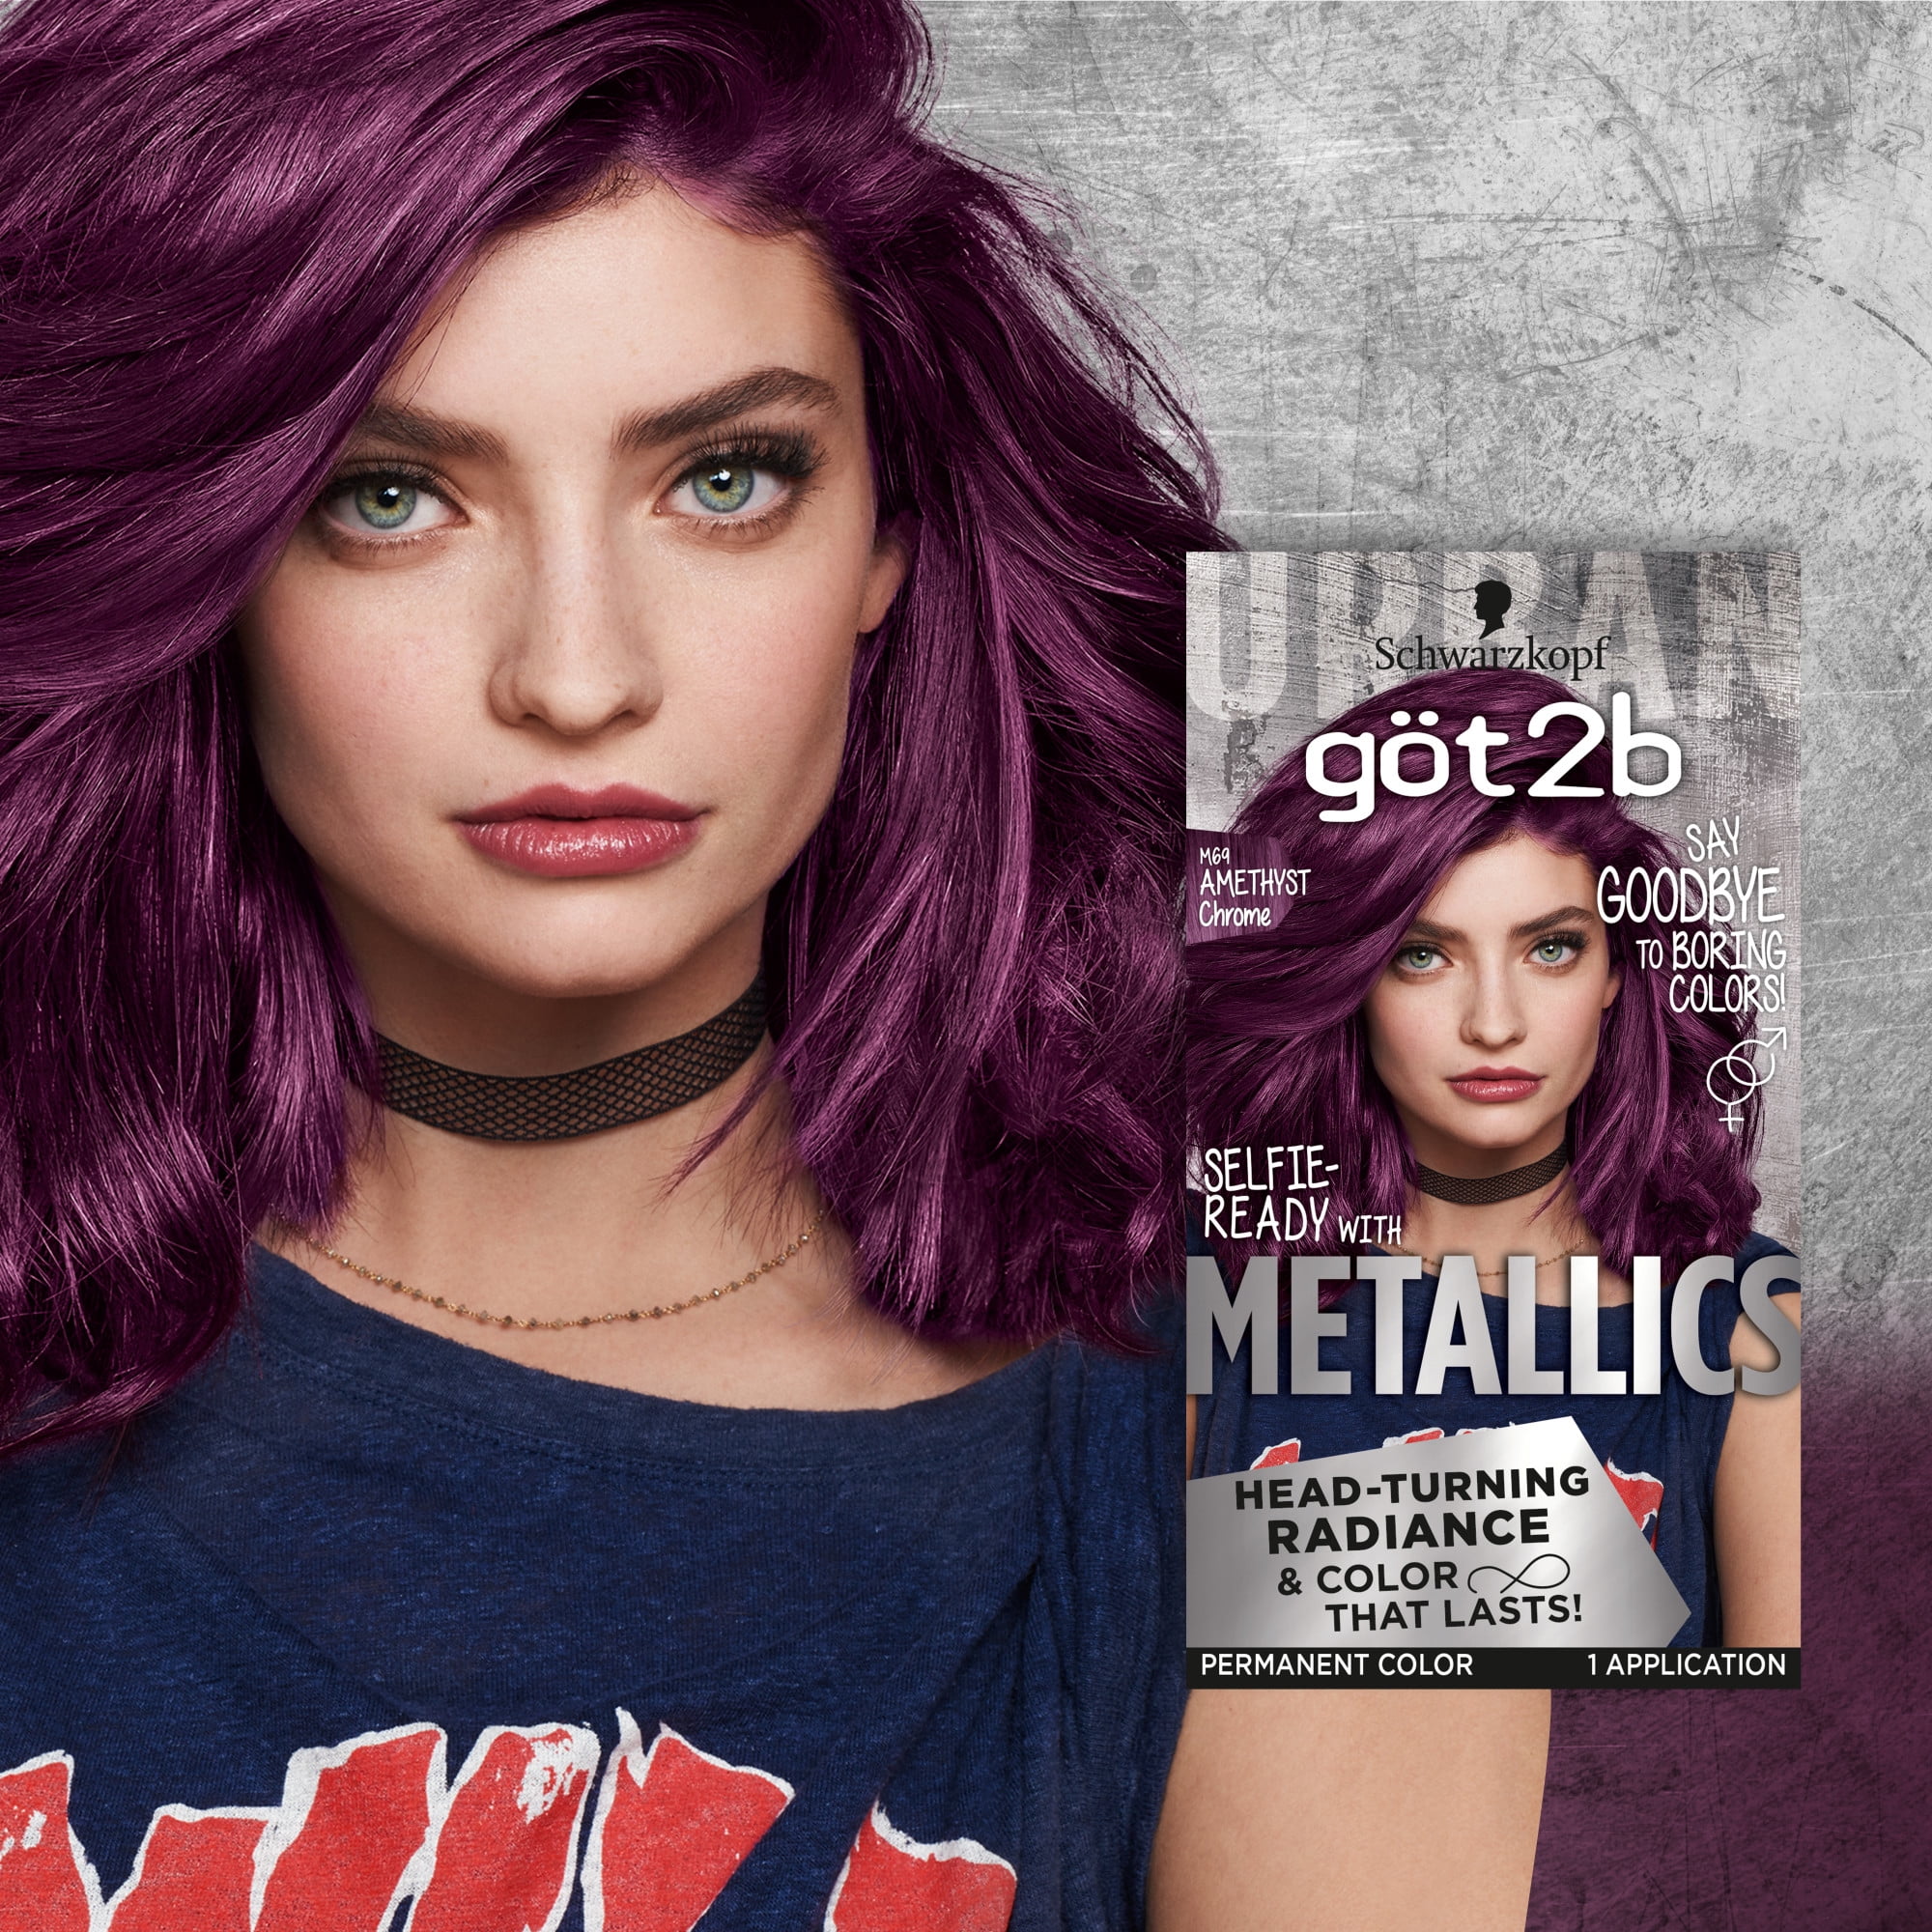 Schwarzkopf Got2b Metallics Permanent Hair Color, M69 Amethyst Chrome